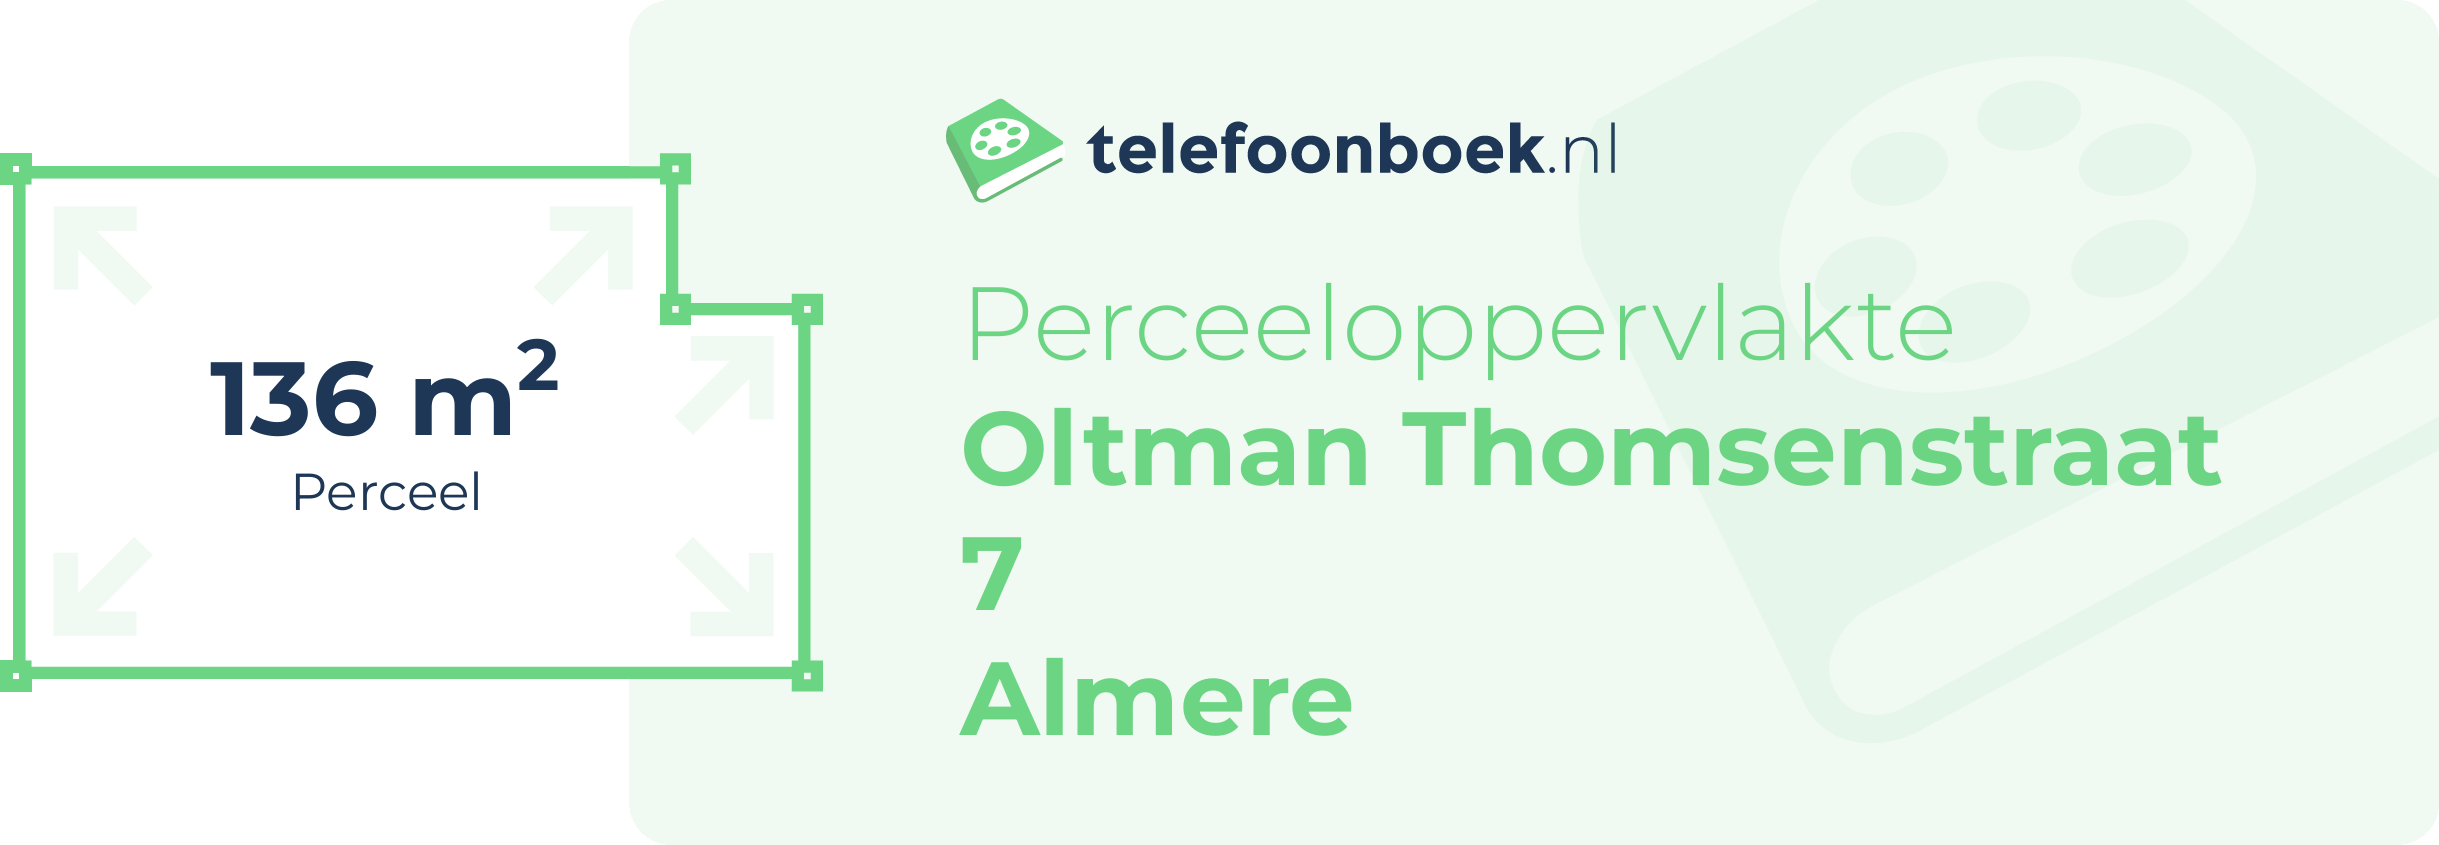 Perceeloppervlakte Oltman Thomsenstraat 7 Almere